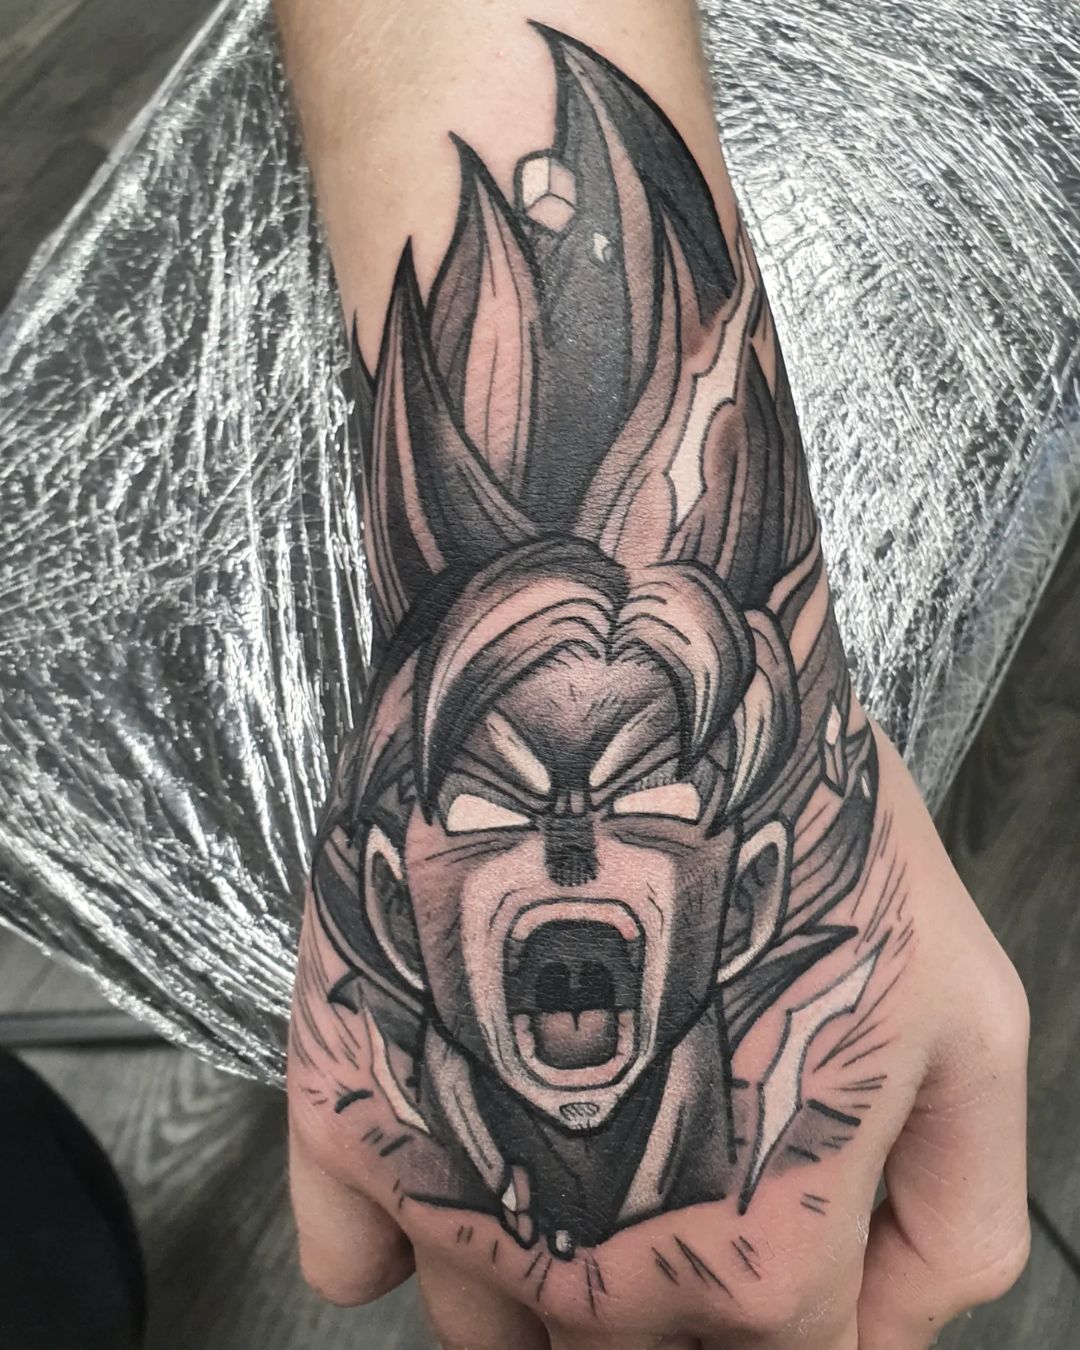 A Striking Fierce Warrior Goku Hand Tattoo